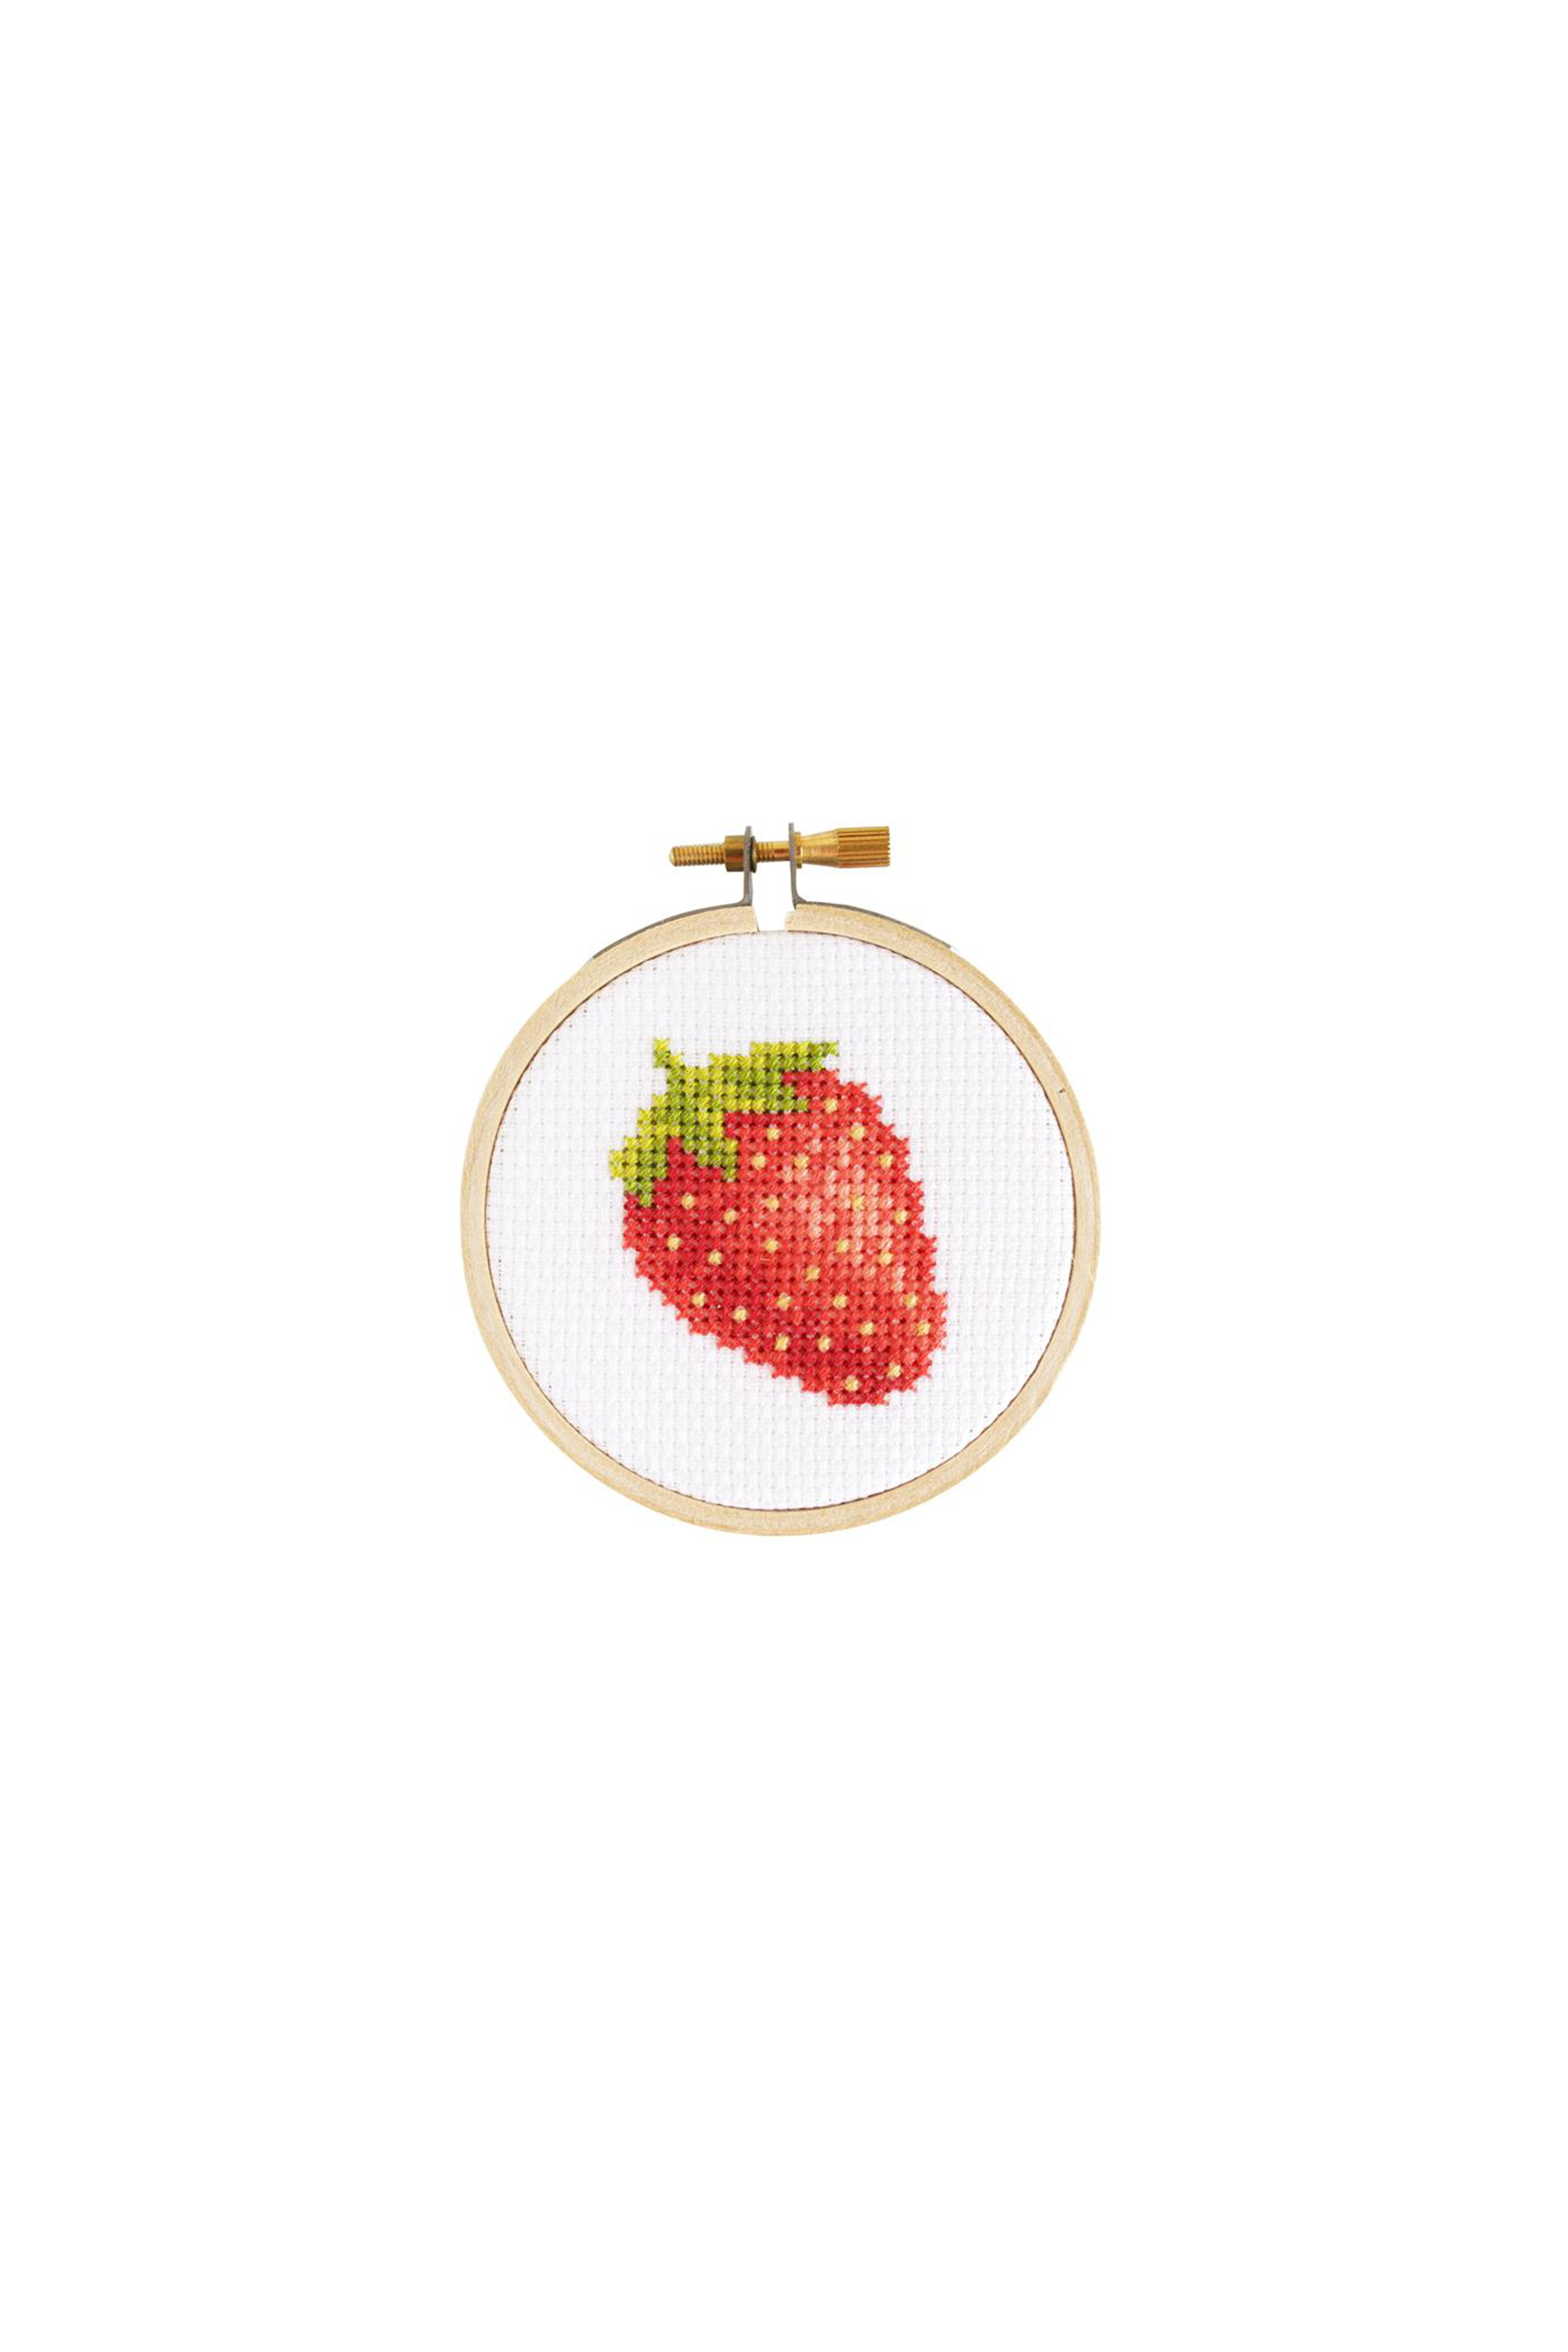 Strawberry DIY Cross Stitch Kit